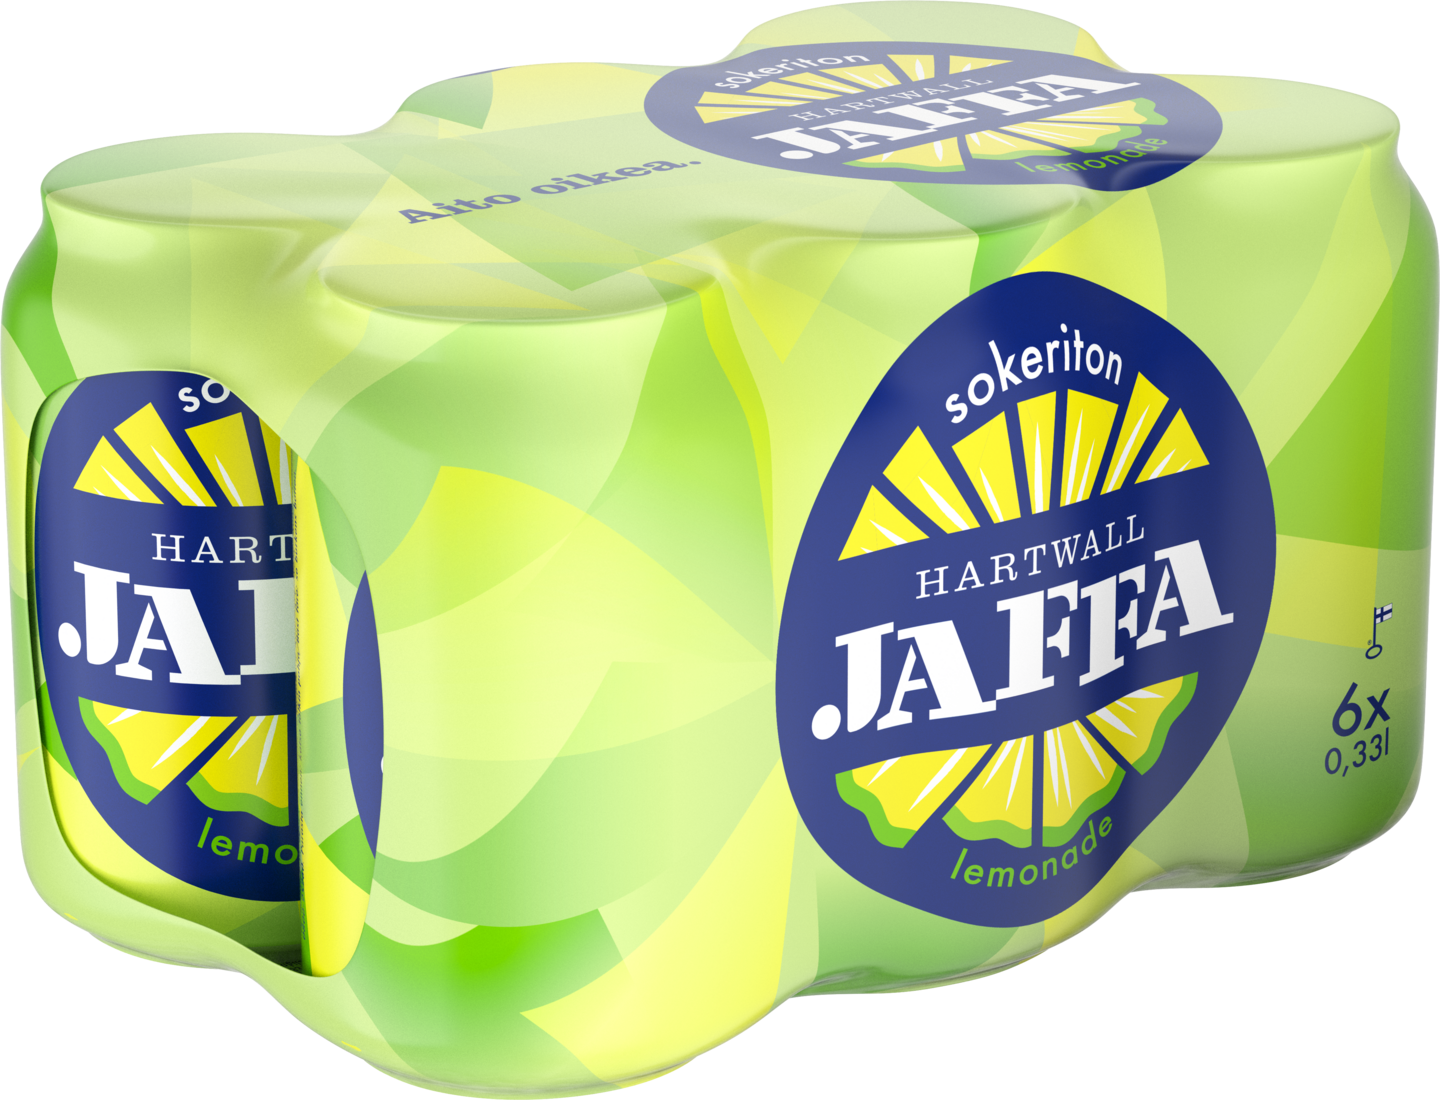 Hartwall Jaffa Lemonade sokeriton virvoitusjuoma 0,33l 6-pack